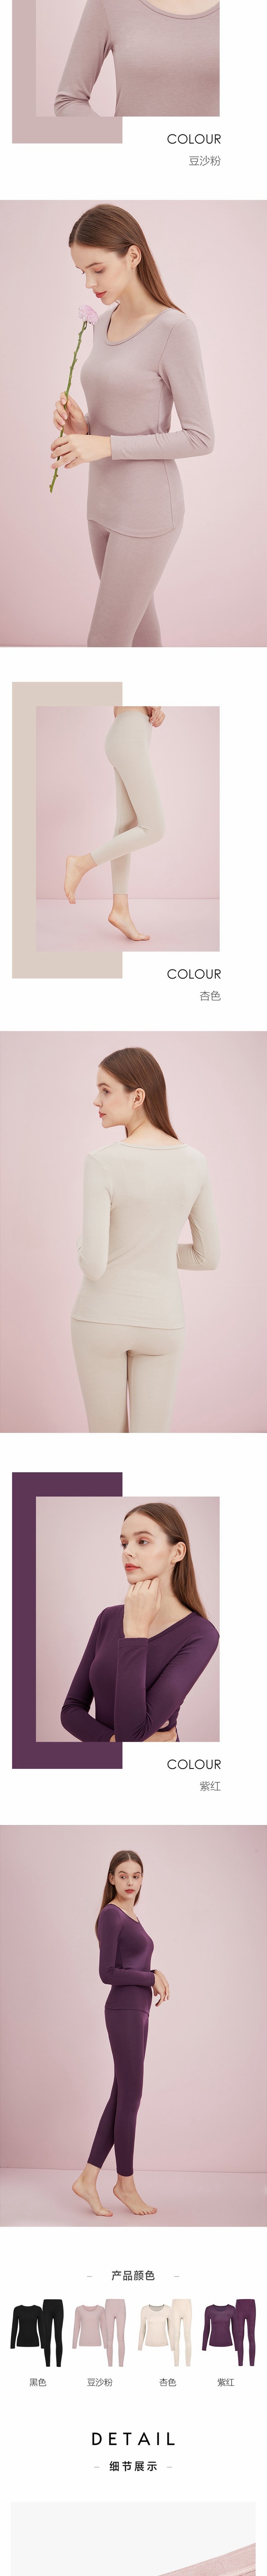 Lifease Women's Thermal Underwear Set 2.0 Apricot Large